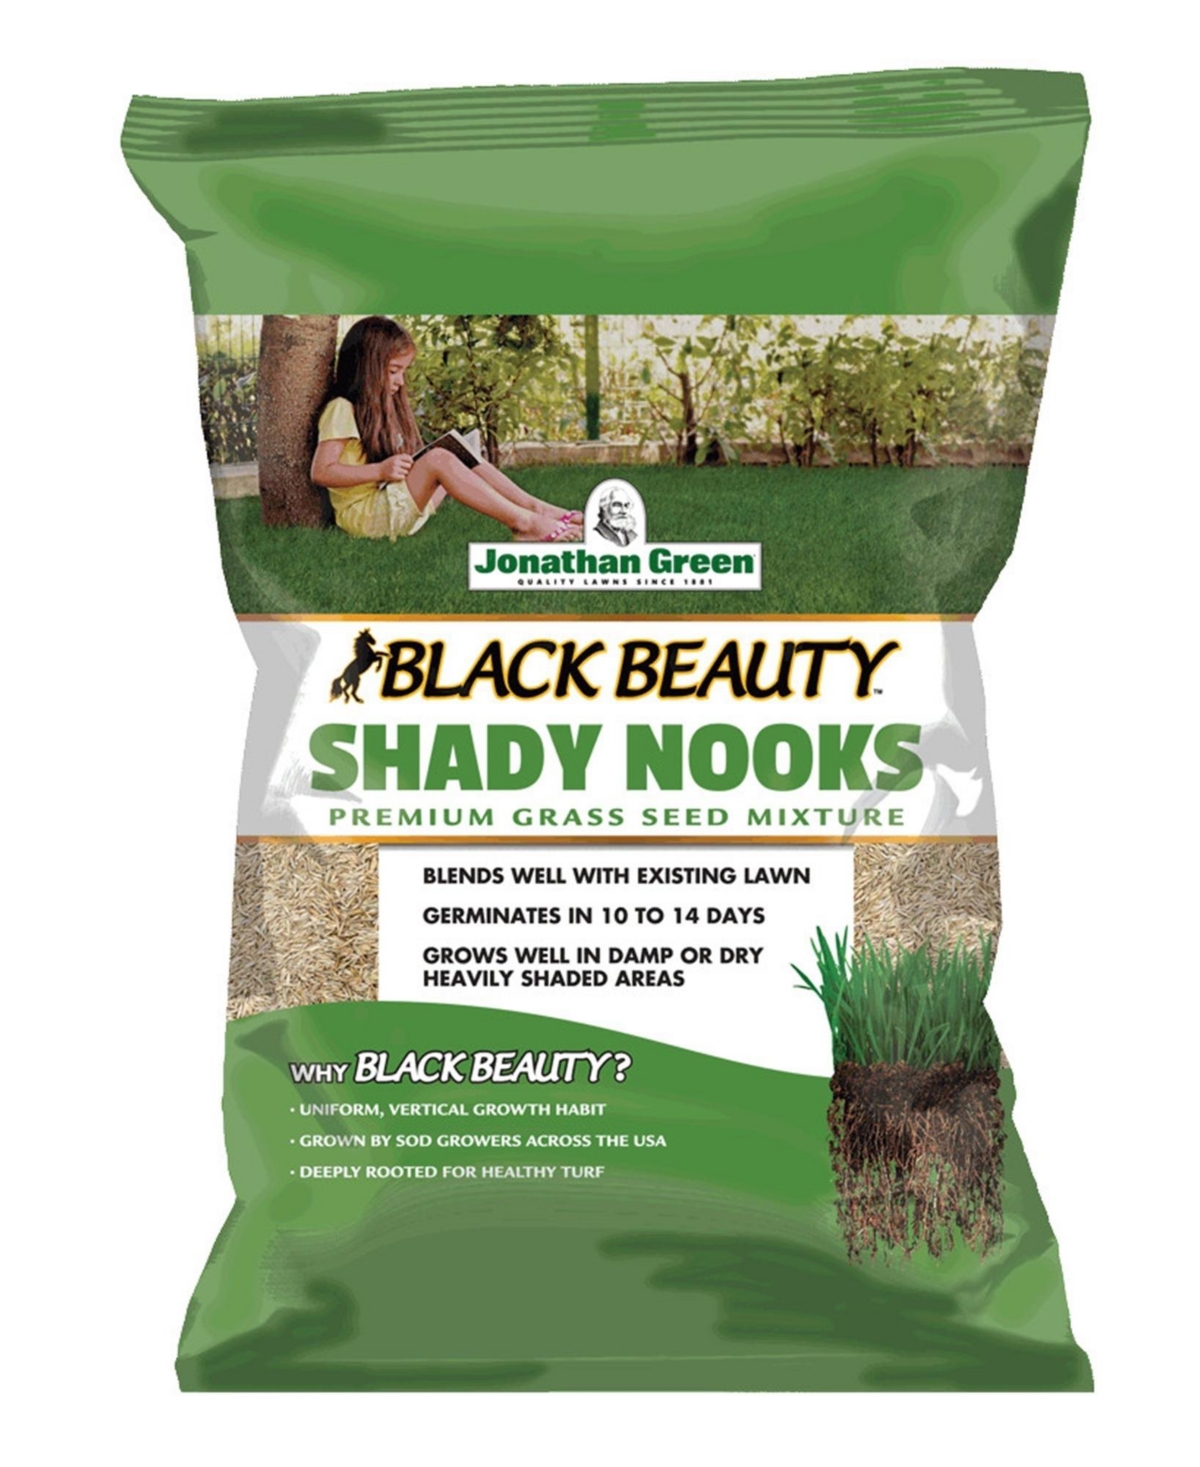 (#11960) Black Beauty Shady Nooks Grass Seed - 25lb bag - Green